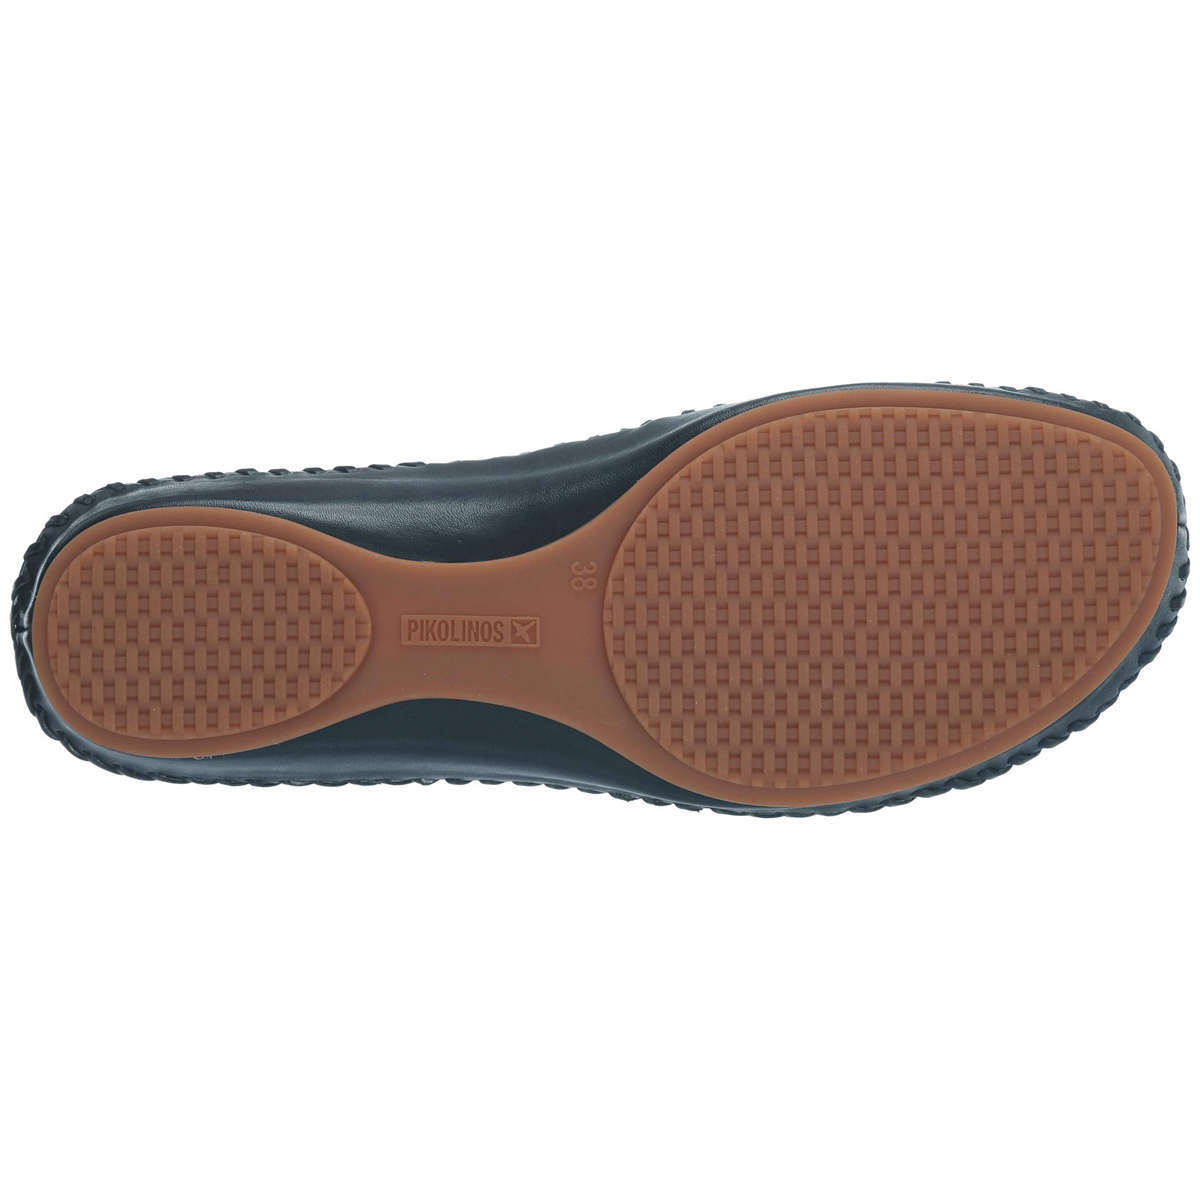 Pikolinos Puerto Vallarta 655-8312 Leather Womens Sandals#color_navy blue